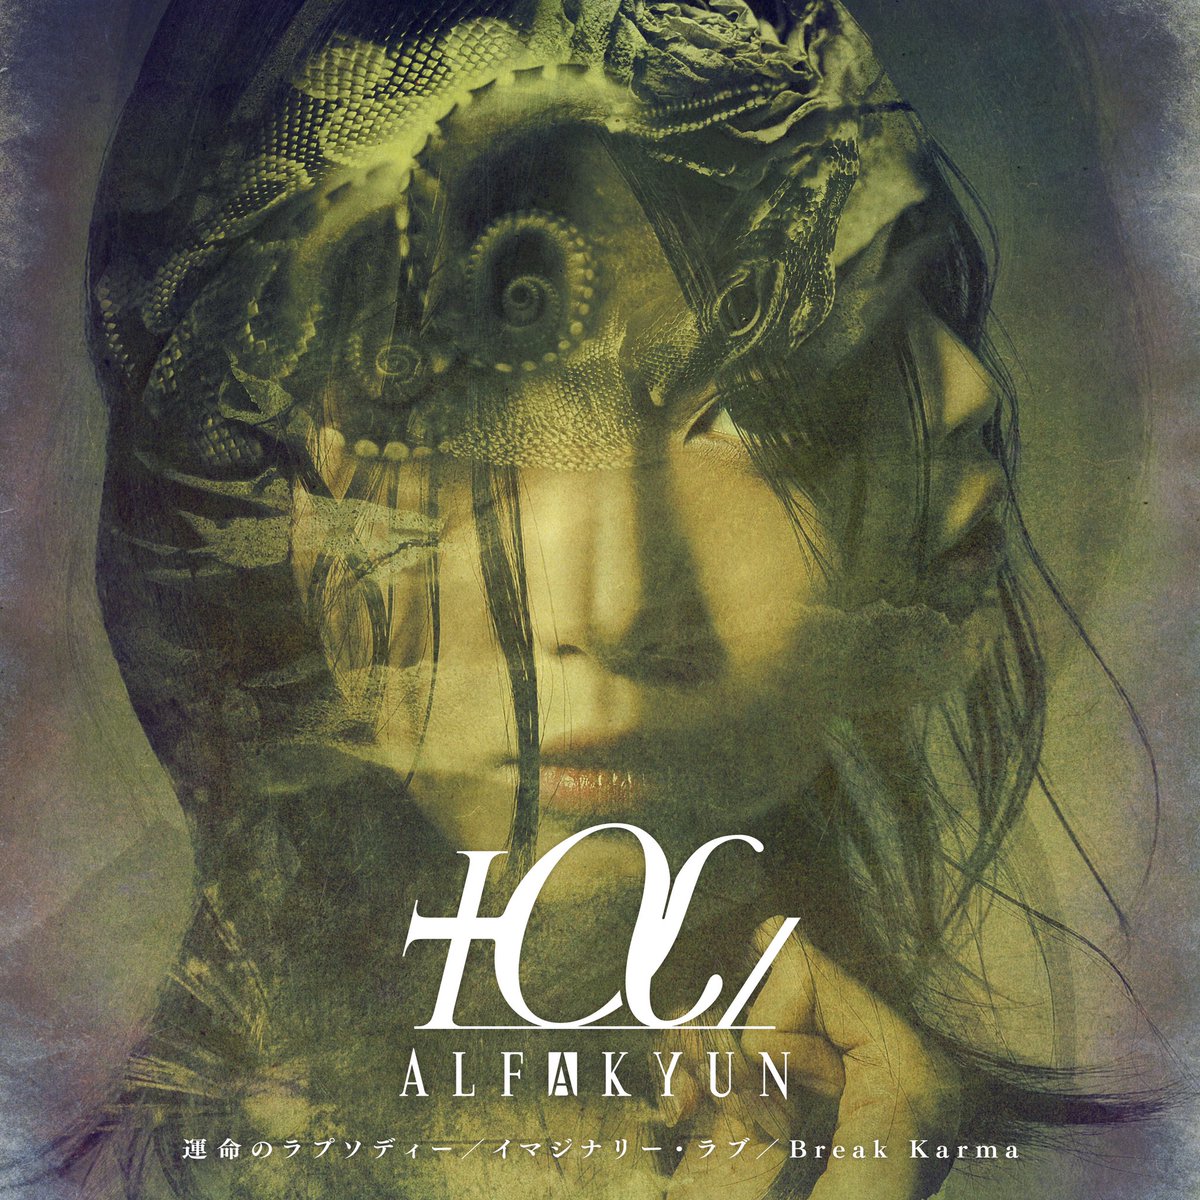 Cover art for『+α/Alfakyun. - Imaginary Love』from the release『Unmei no Rhapsody / Imaginary Love / Break Karma』